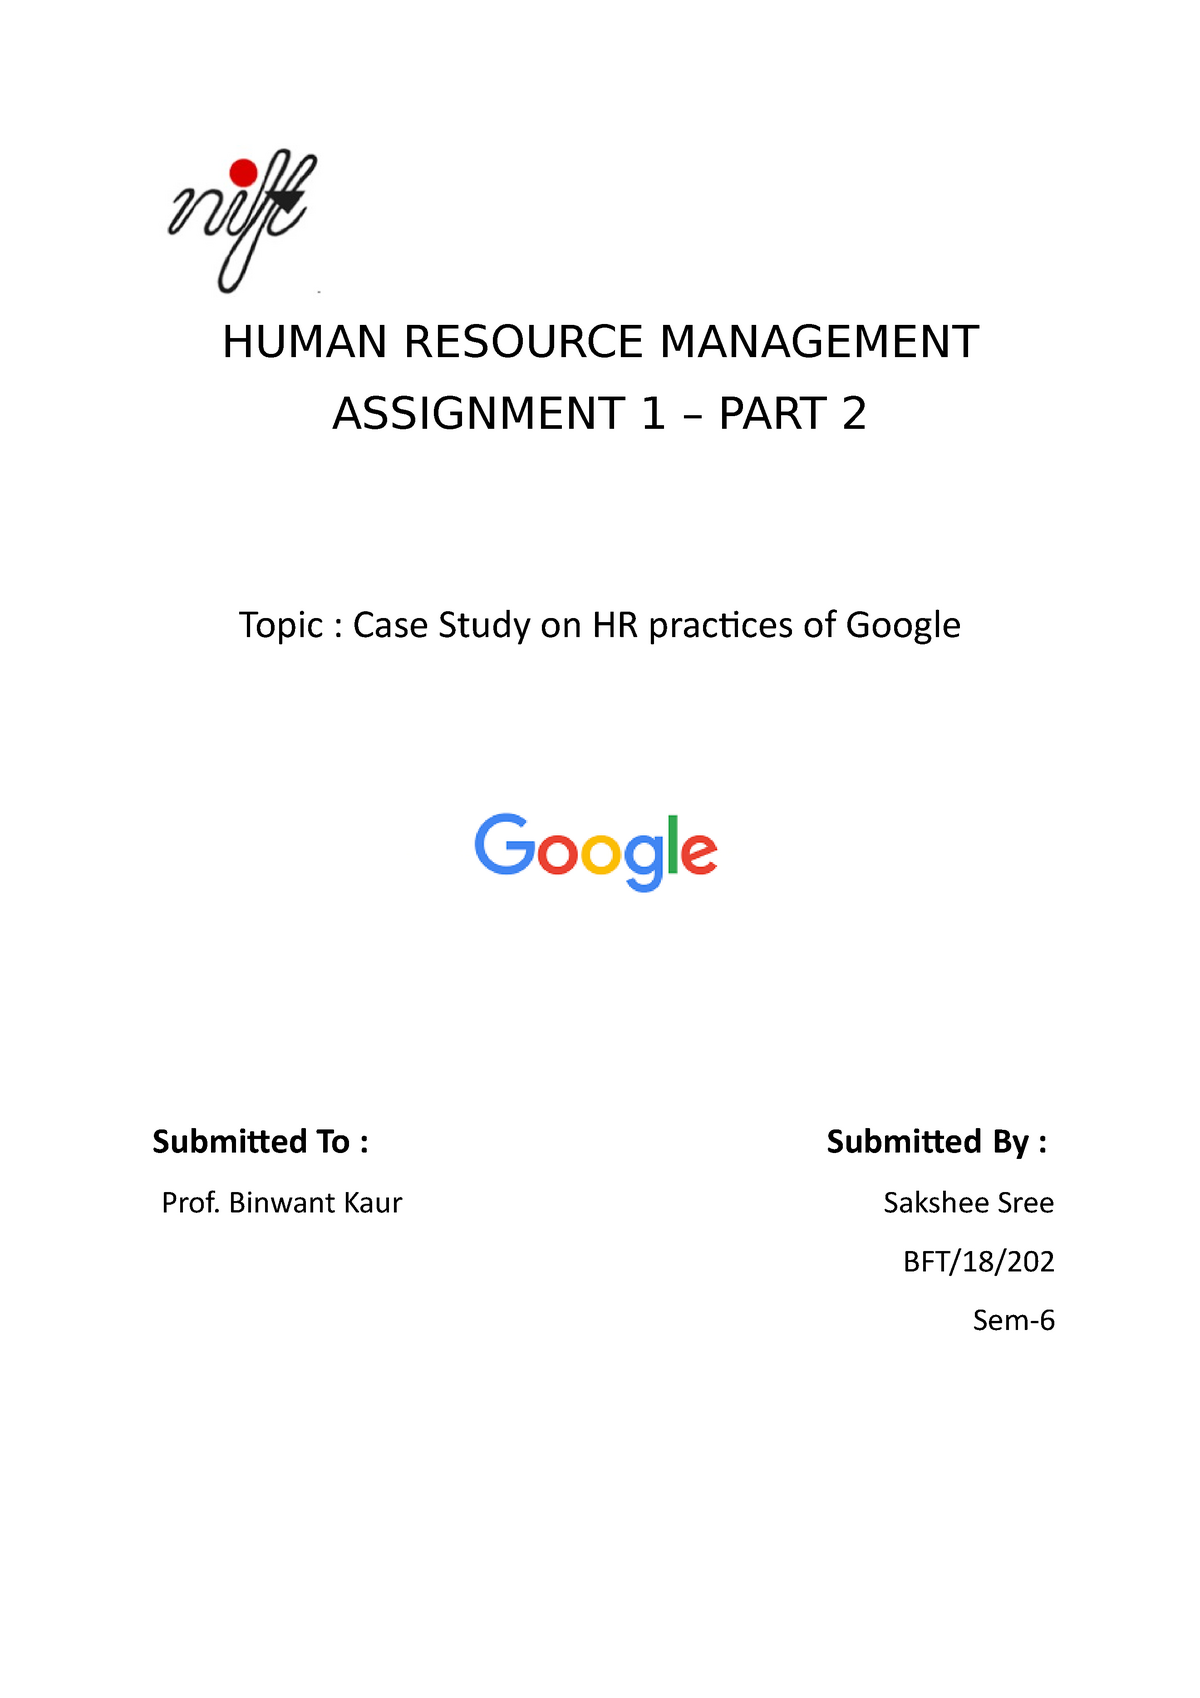 google human resource management case study pdf